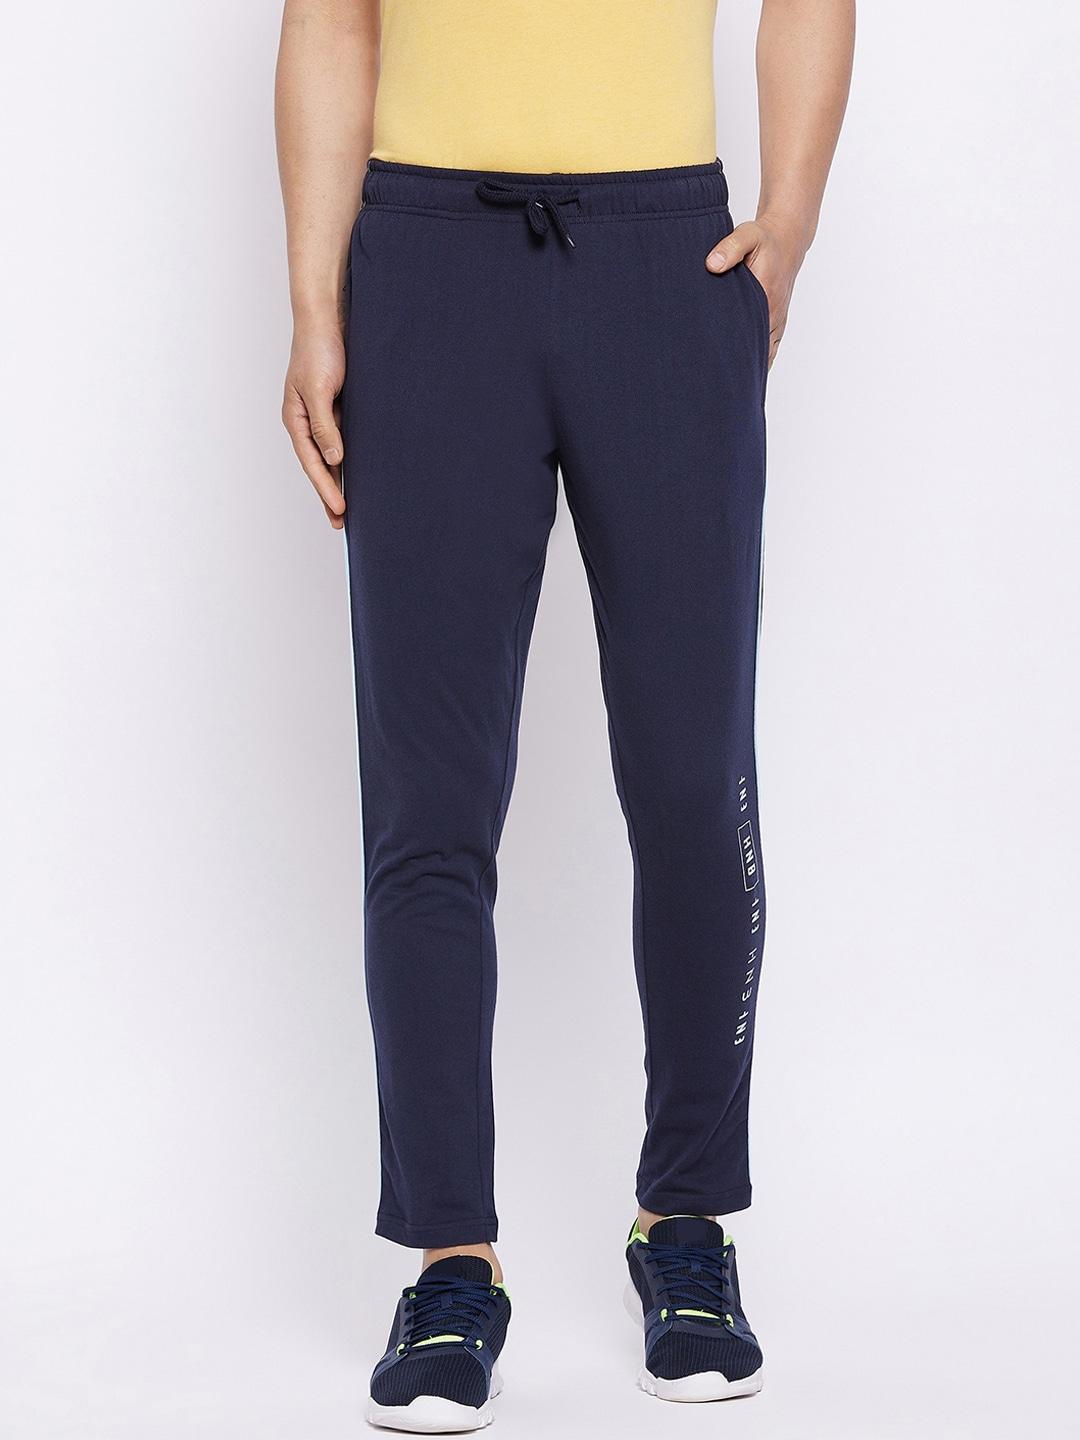 harbornbay-men-blue-solid-cotton-track-pants